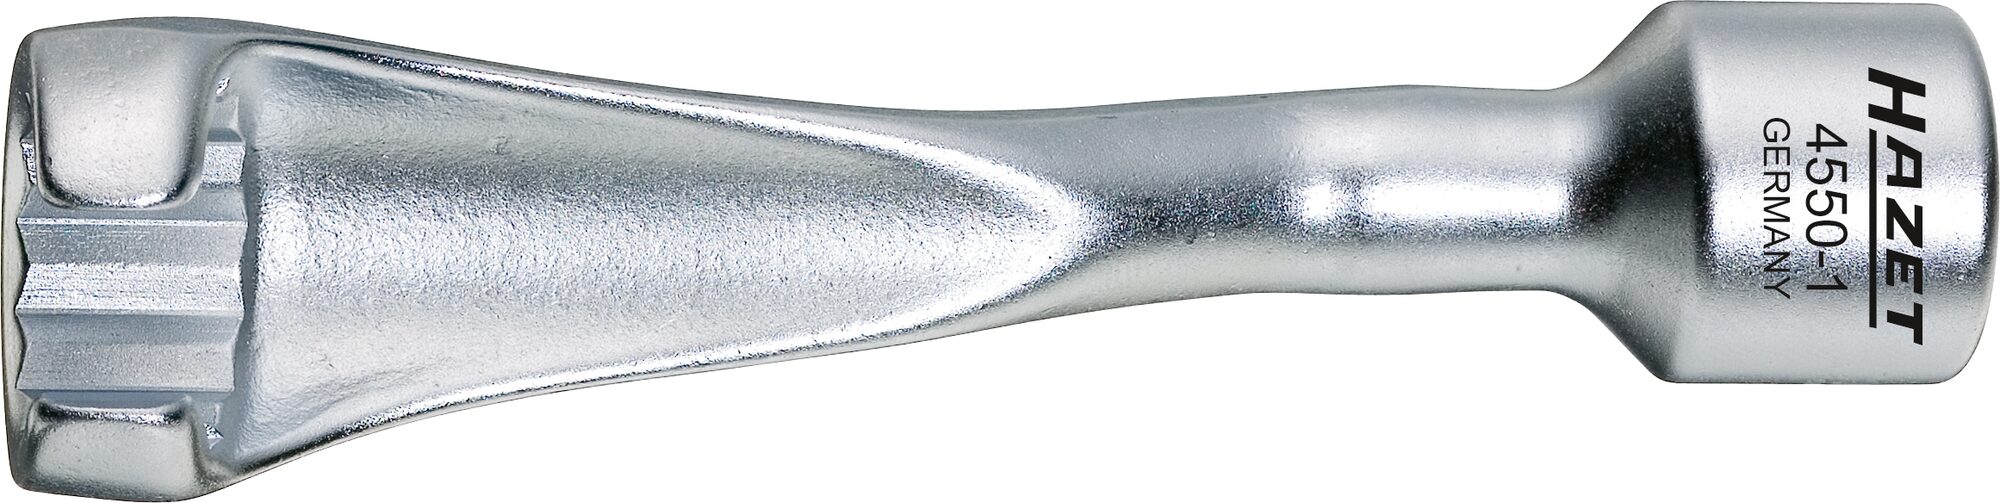 HAZET Einspritzleitungs-Schlüssel 4550-1 · Vierkant hohl 12,5 mm (1/2 Zoll) · Außen Doppel-Sechskant Profil · 17 mm